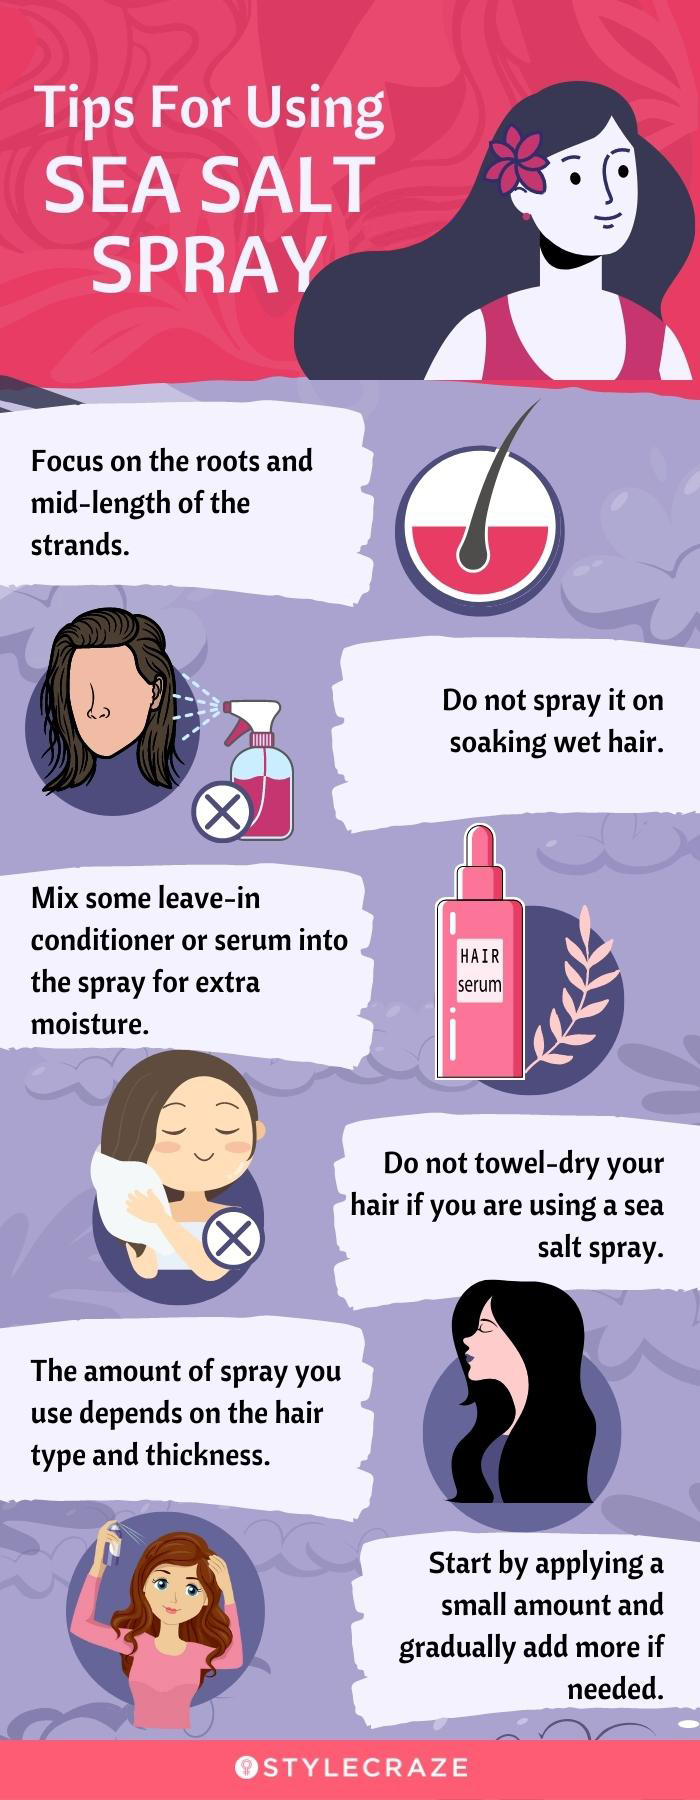 tips for using sea salt spray [infographic]